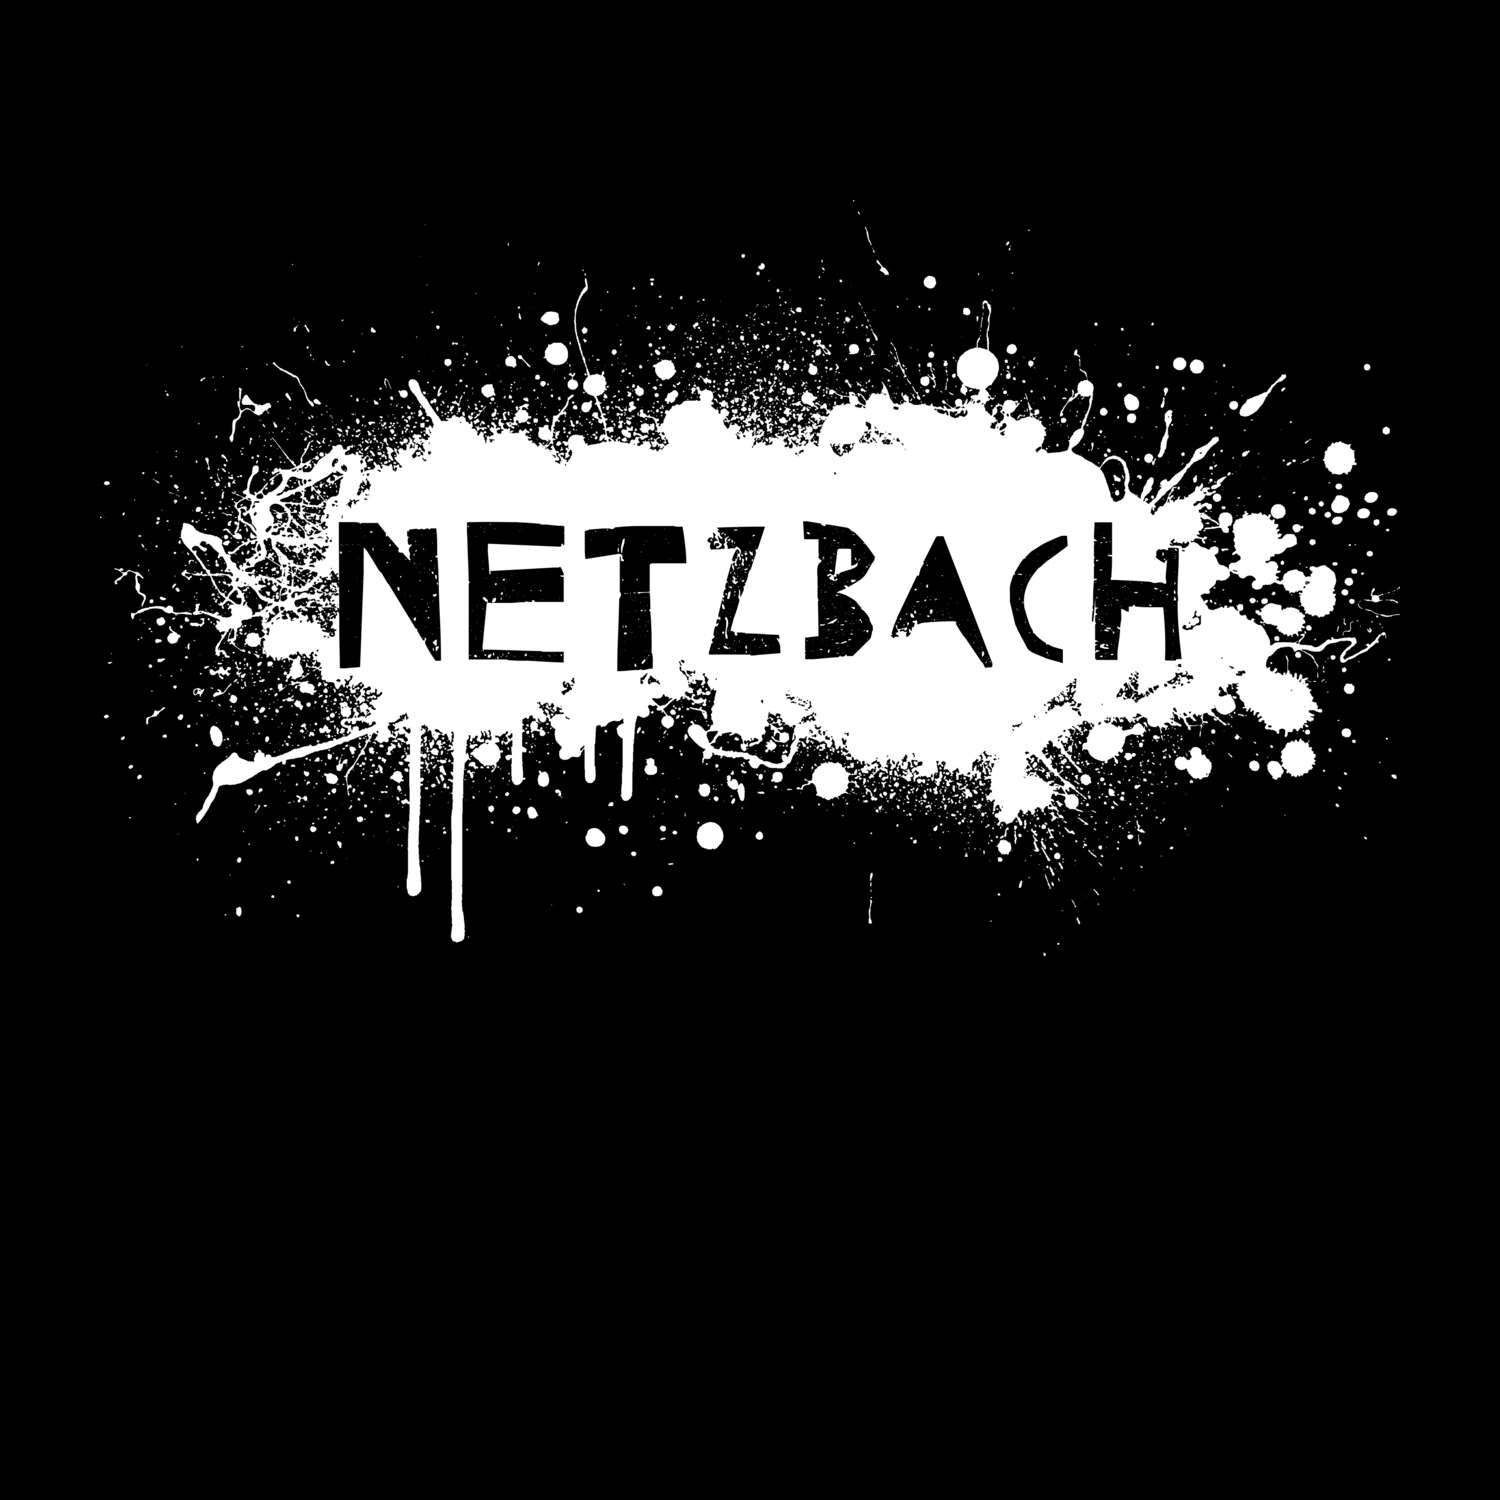 Netzbach T-Shirt »Paint Splash Punk«